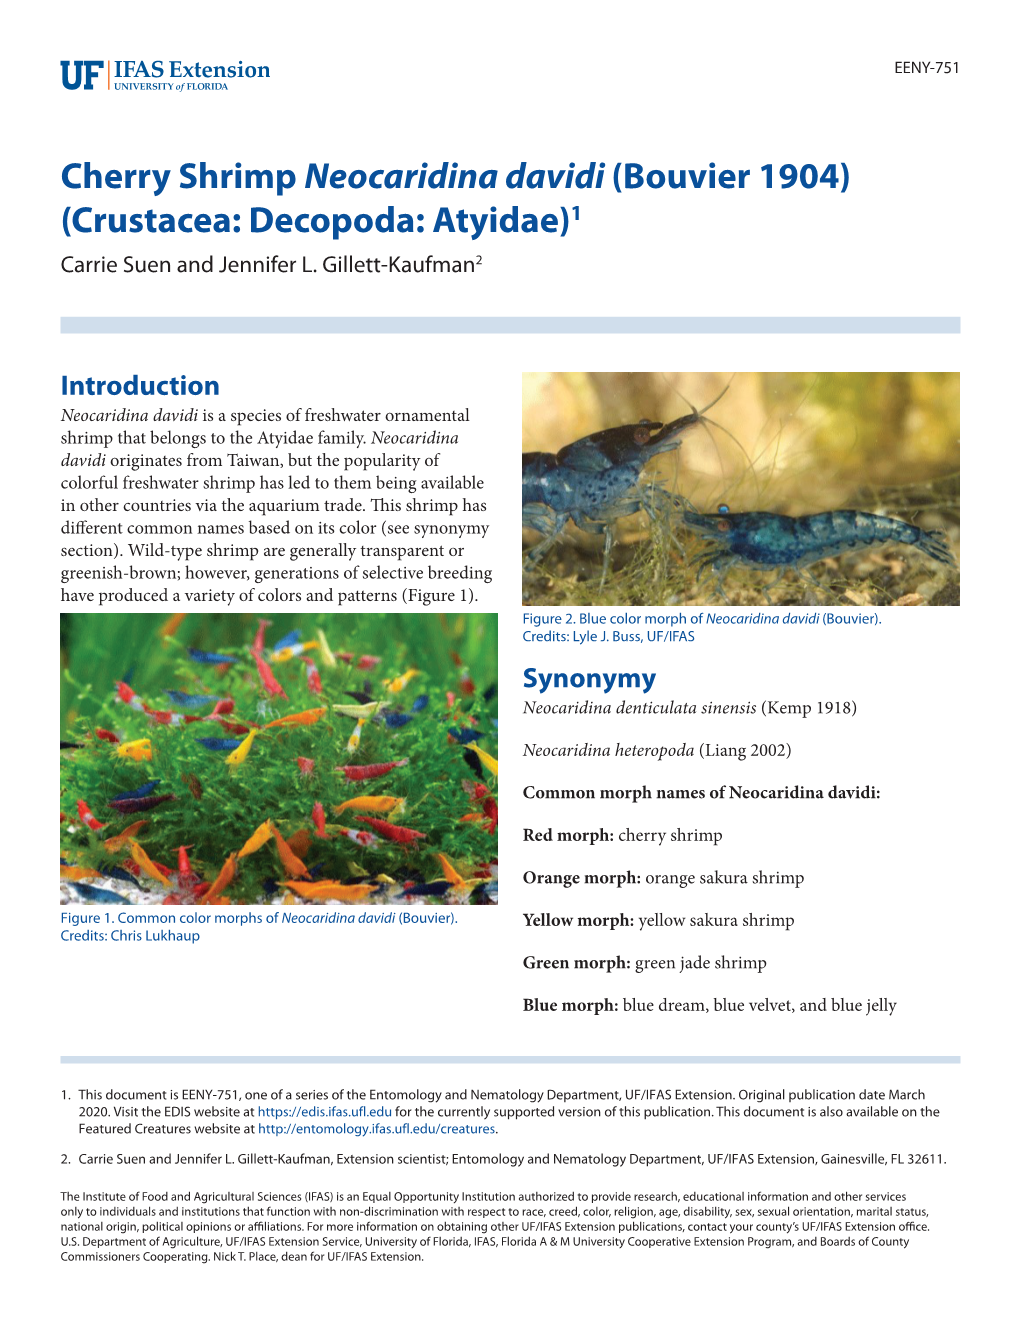 Cherry Shrimp Neocaridina Davidi (Bouvier 1904) (Crustacea: Decopoda: Atyidae)1 Carrie Suen and Jennifer L